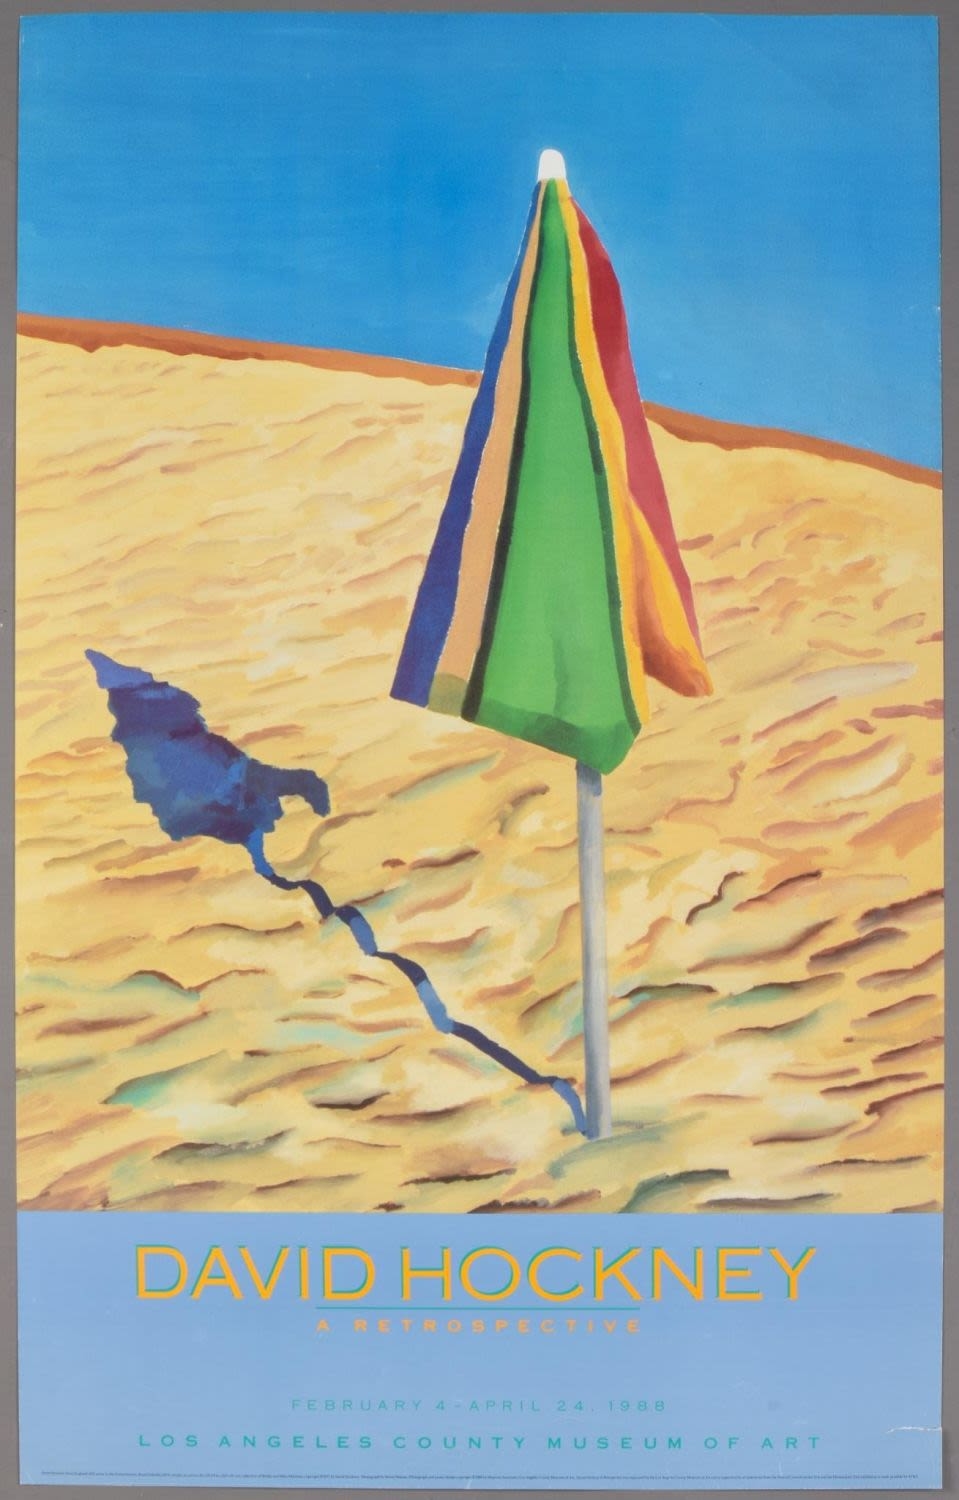 David Hockney | Retrospective Exhibition Poster (1988) | MutualArt